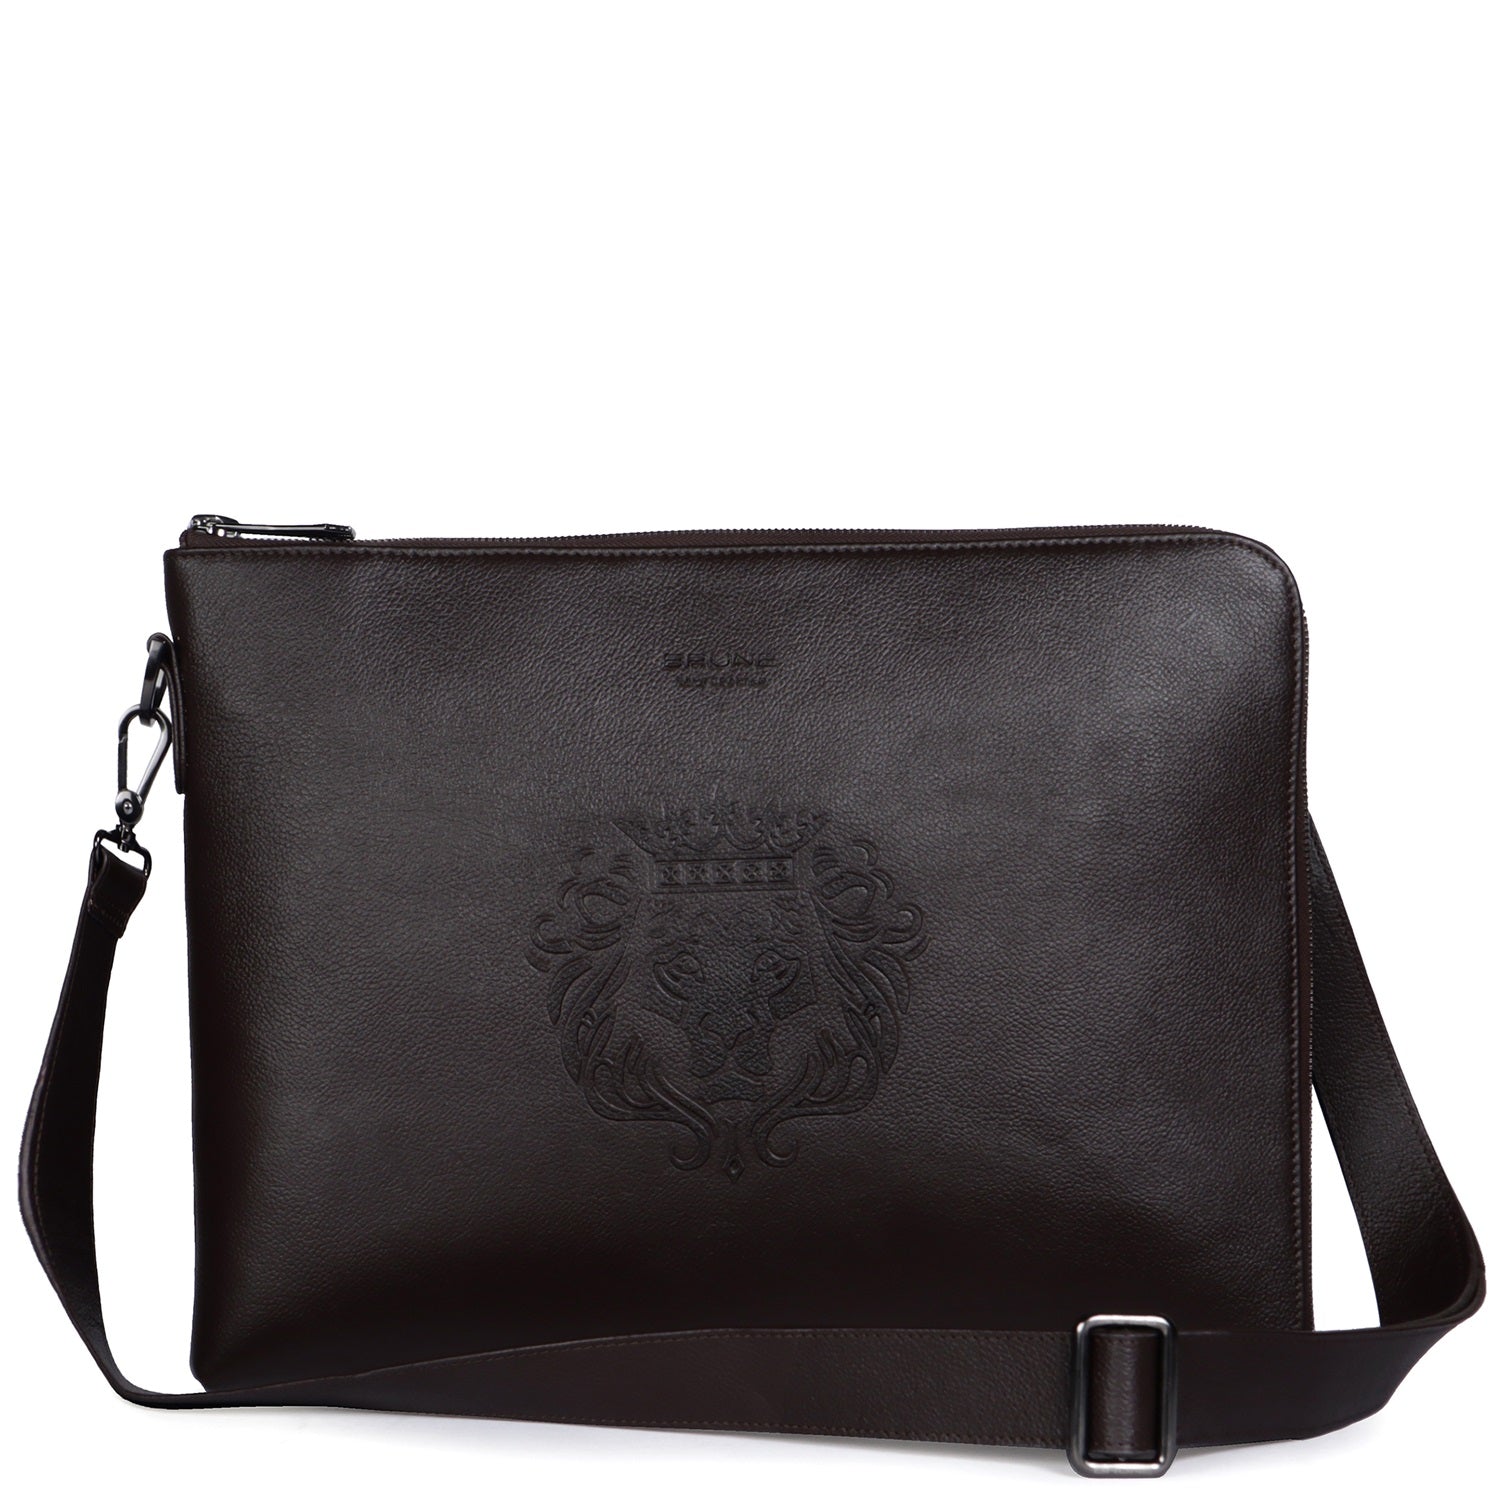 Leather Messenger Bags - Buy Genuine Leather Messenger Bag Online ...